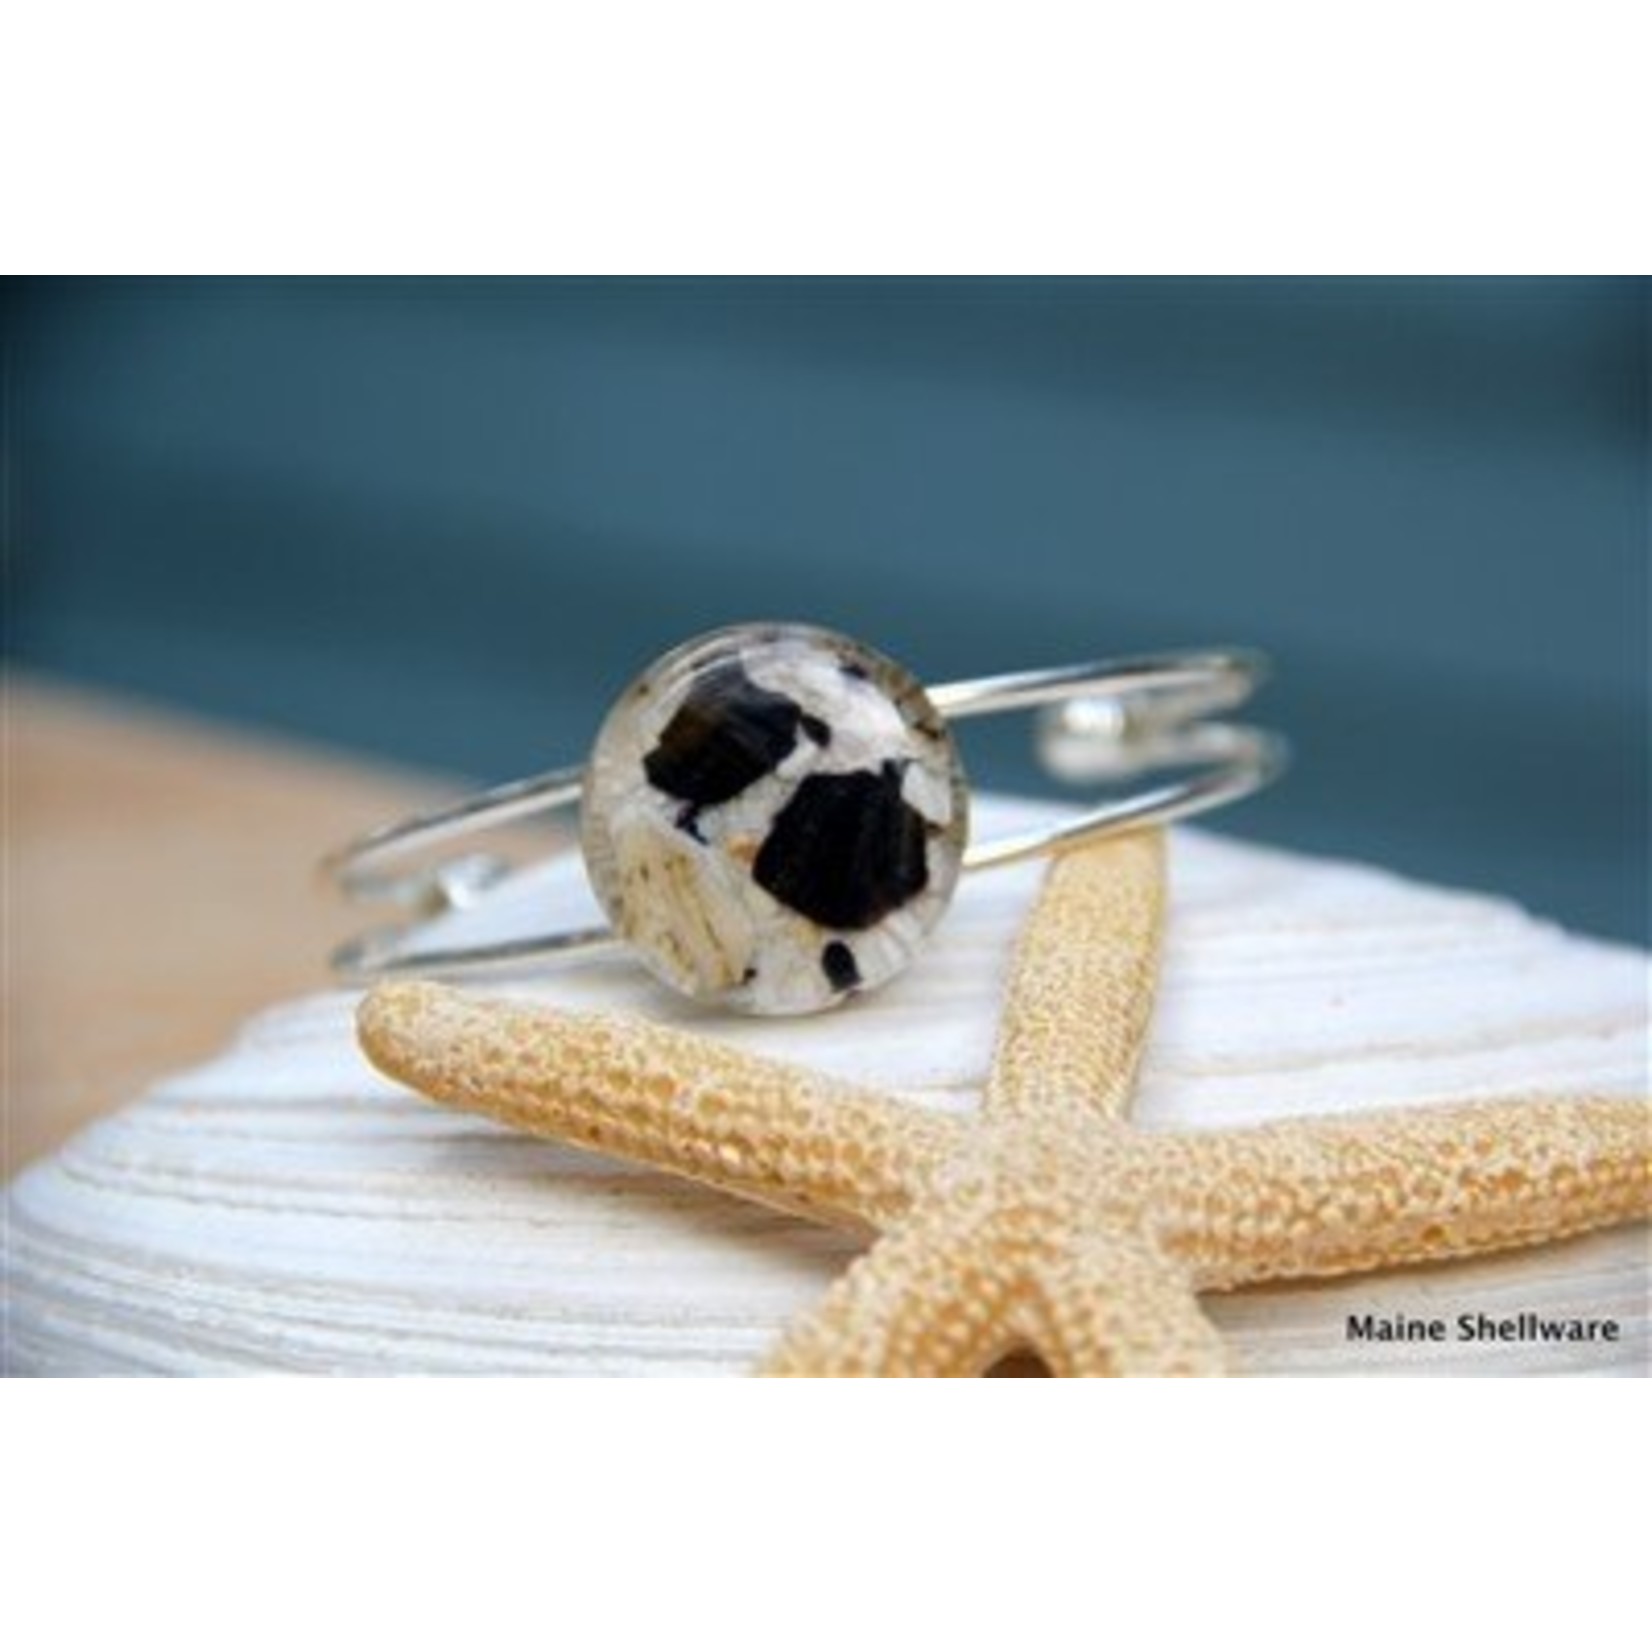 Maine Shellware Silver Cuff Bracelet - Seashell